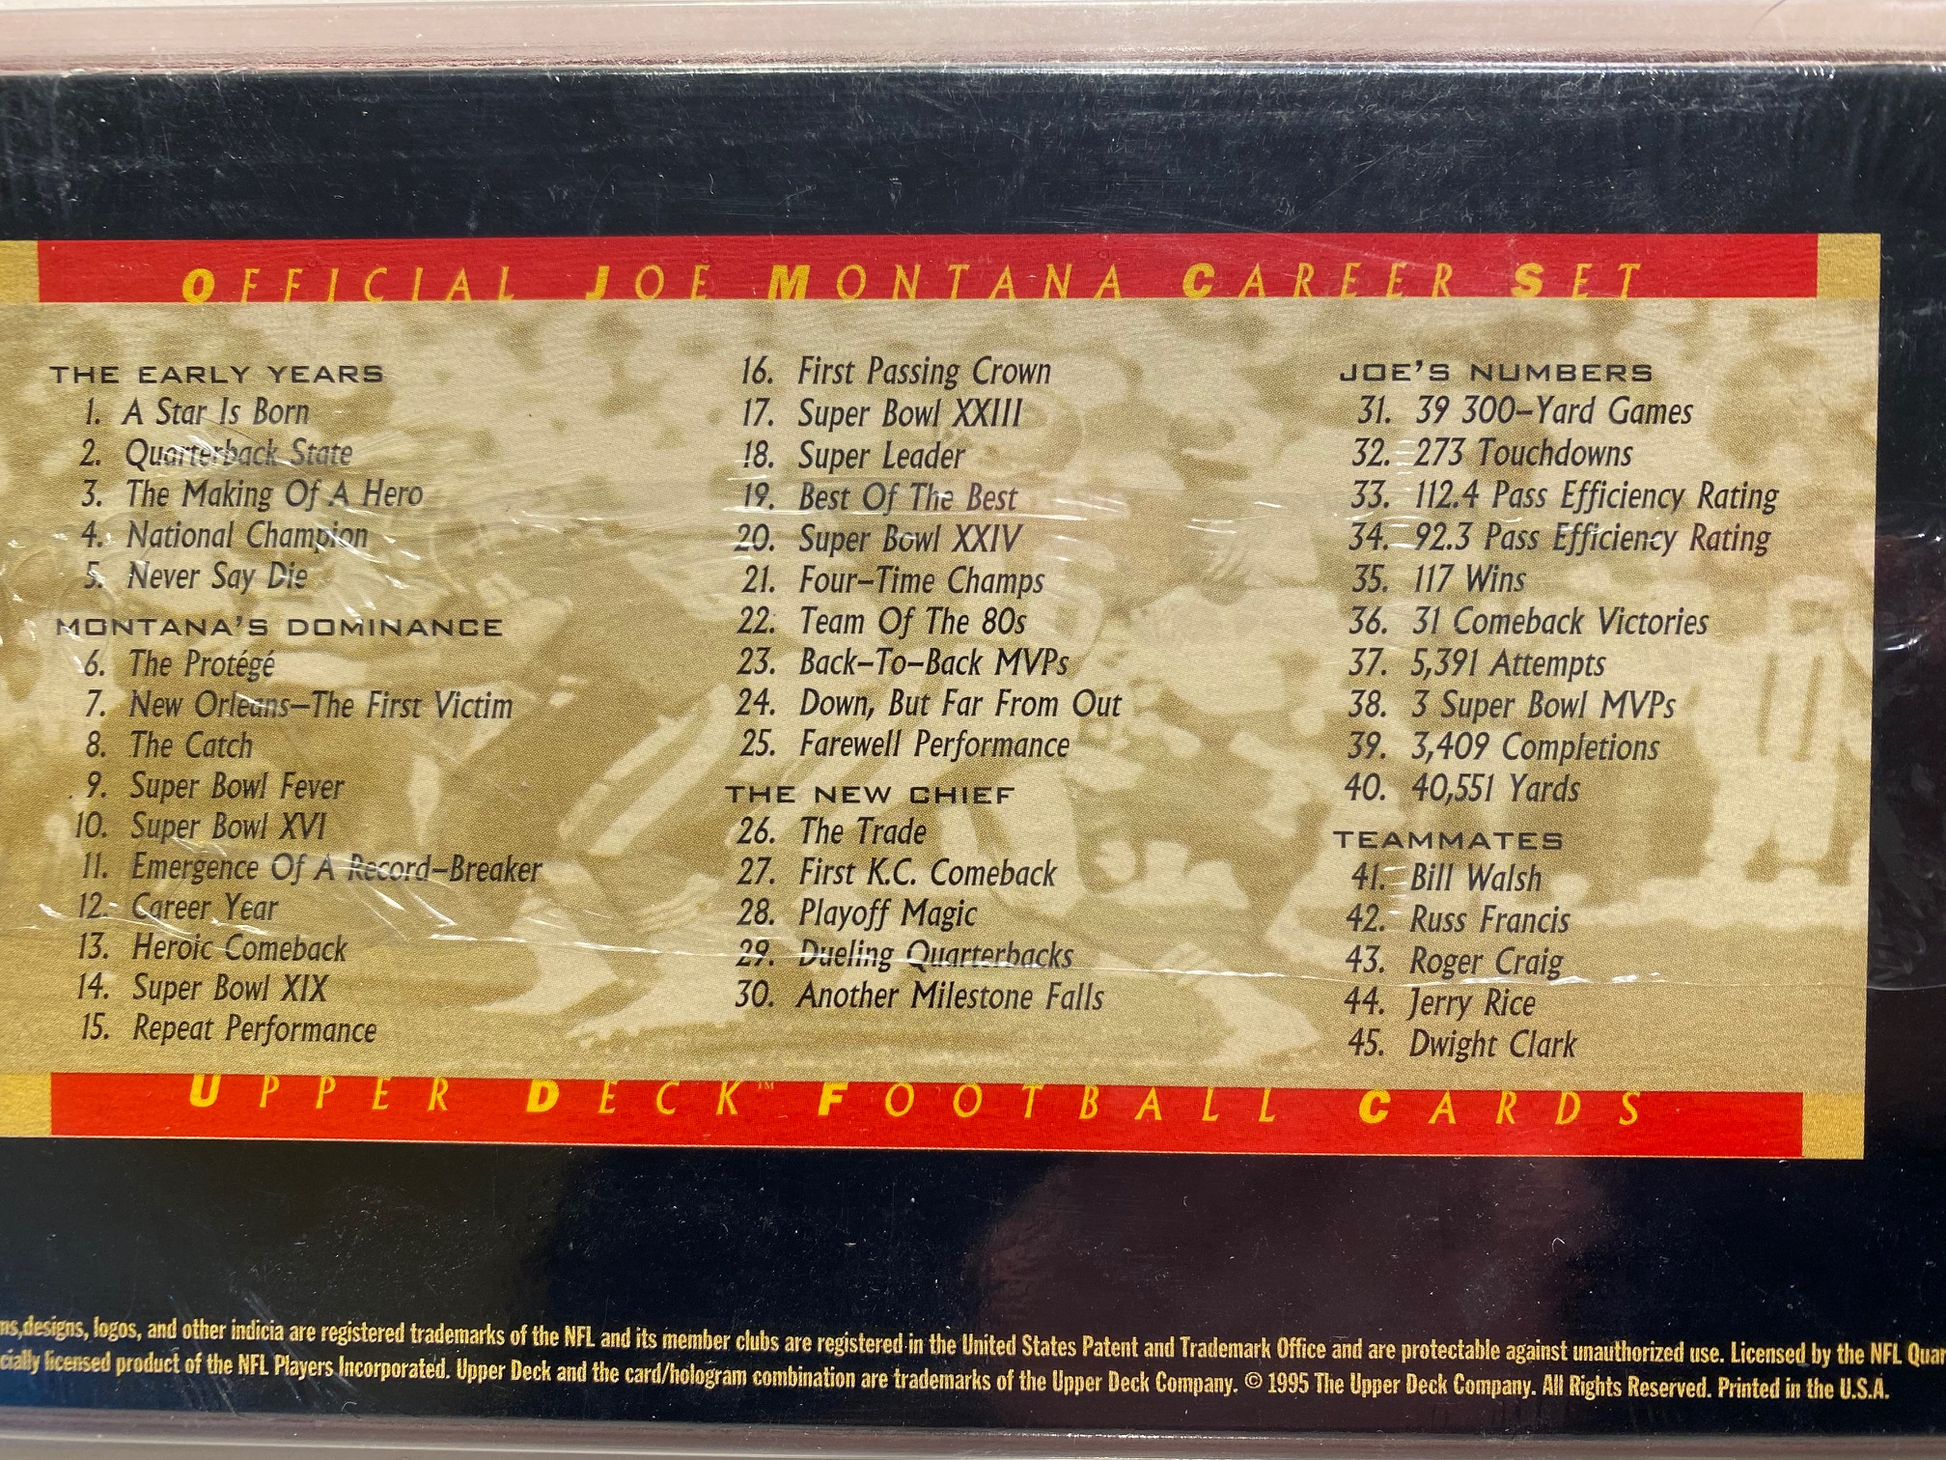 Joe Montana Career Set of Trading Cards - Upper Deck - 1995 (Still in original packaging never opened) - BMC Collectibles